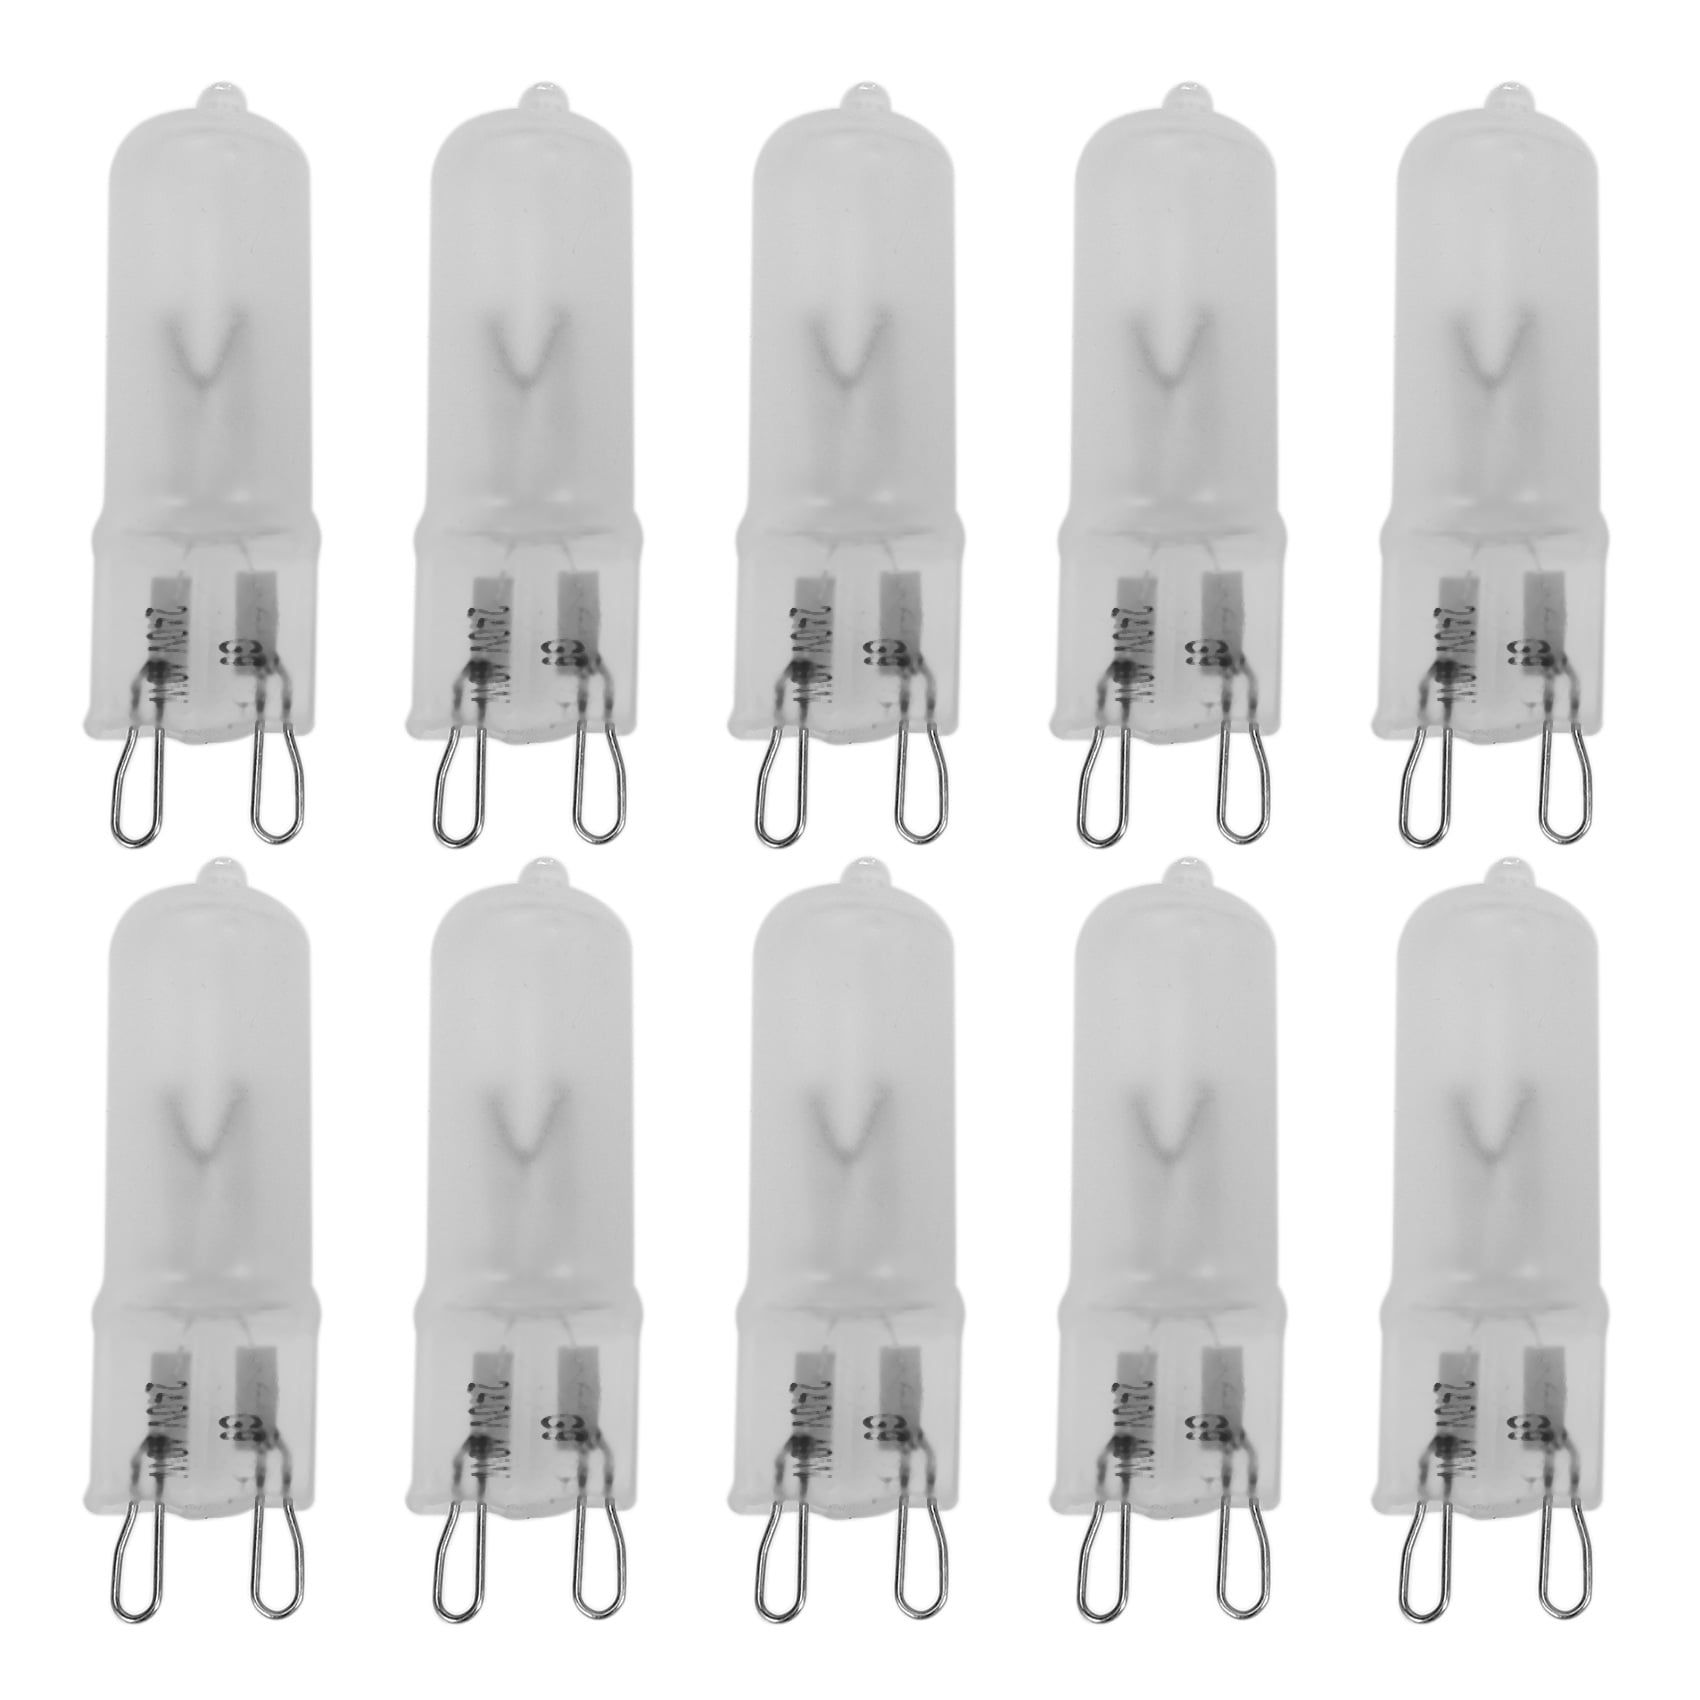 10x 40W Halogen G9 Dimmable Capsule Light Energy Saving Bulbs Lamps 